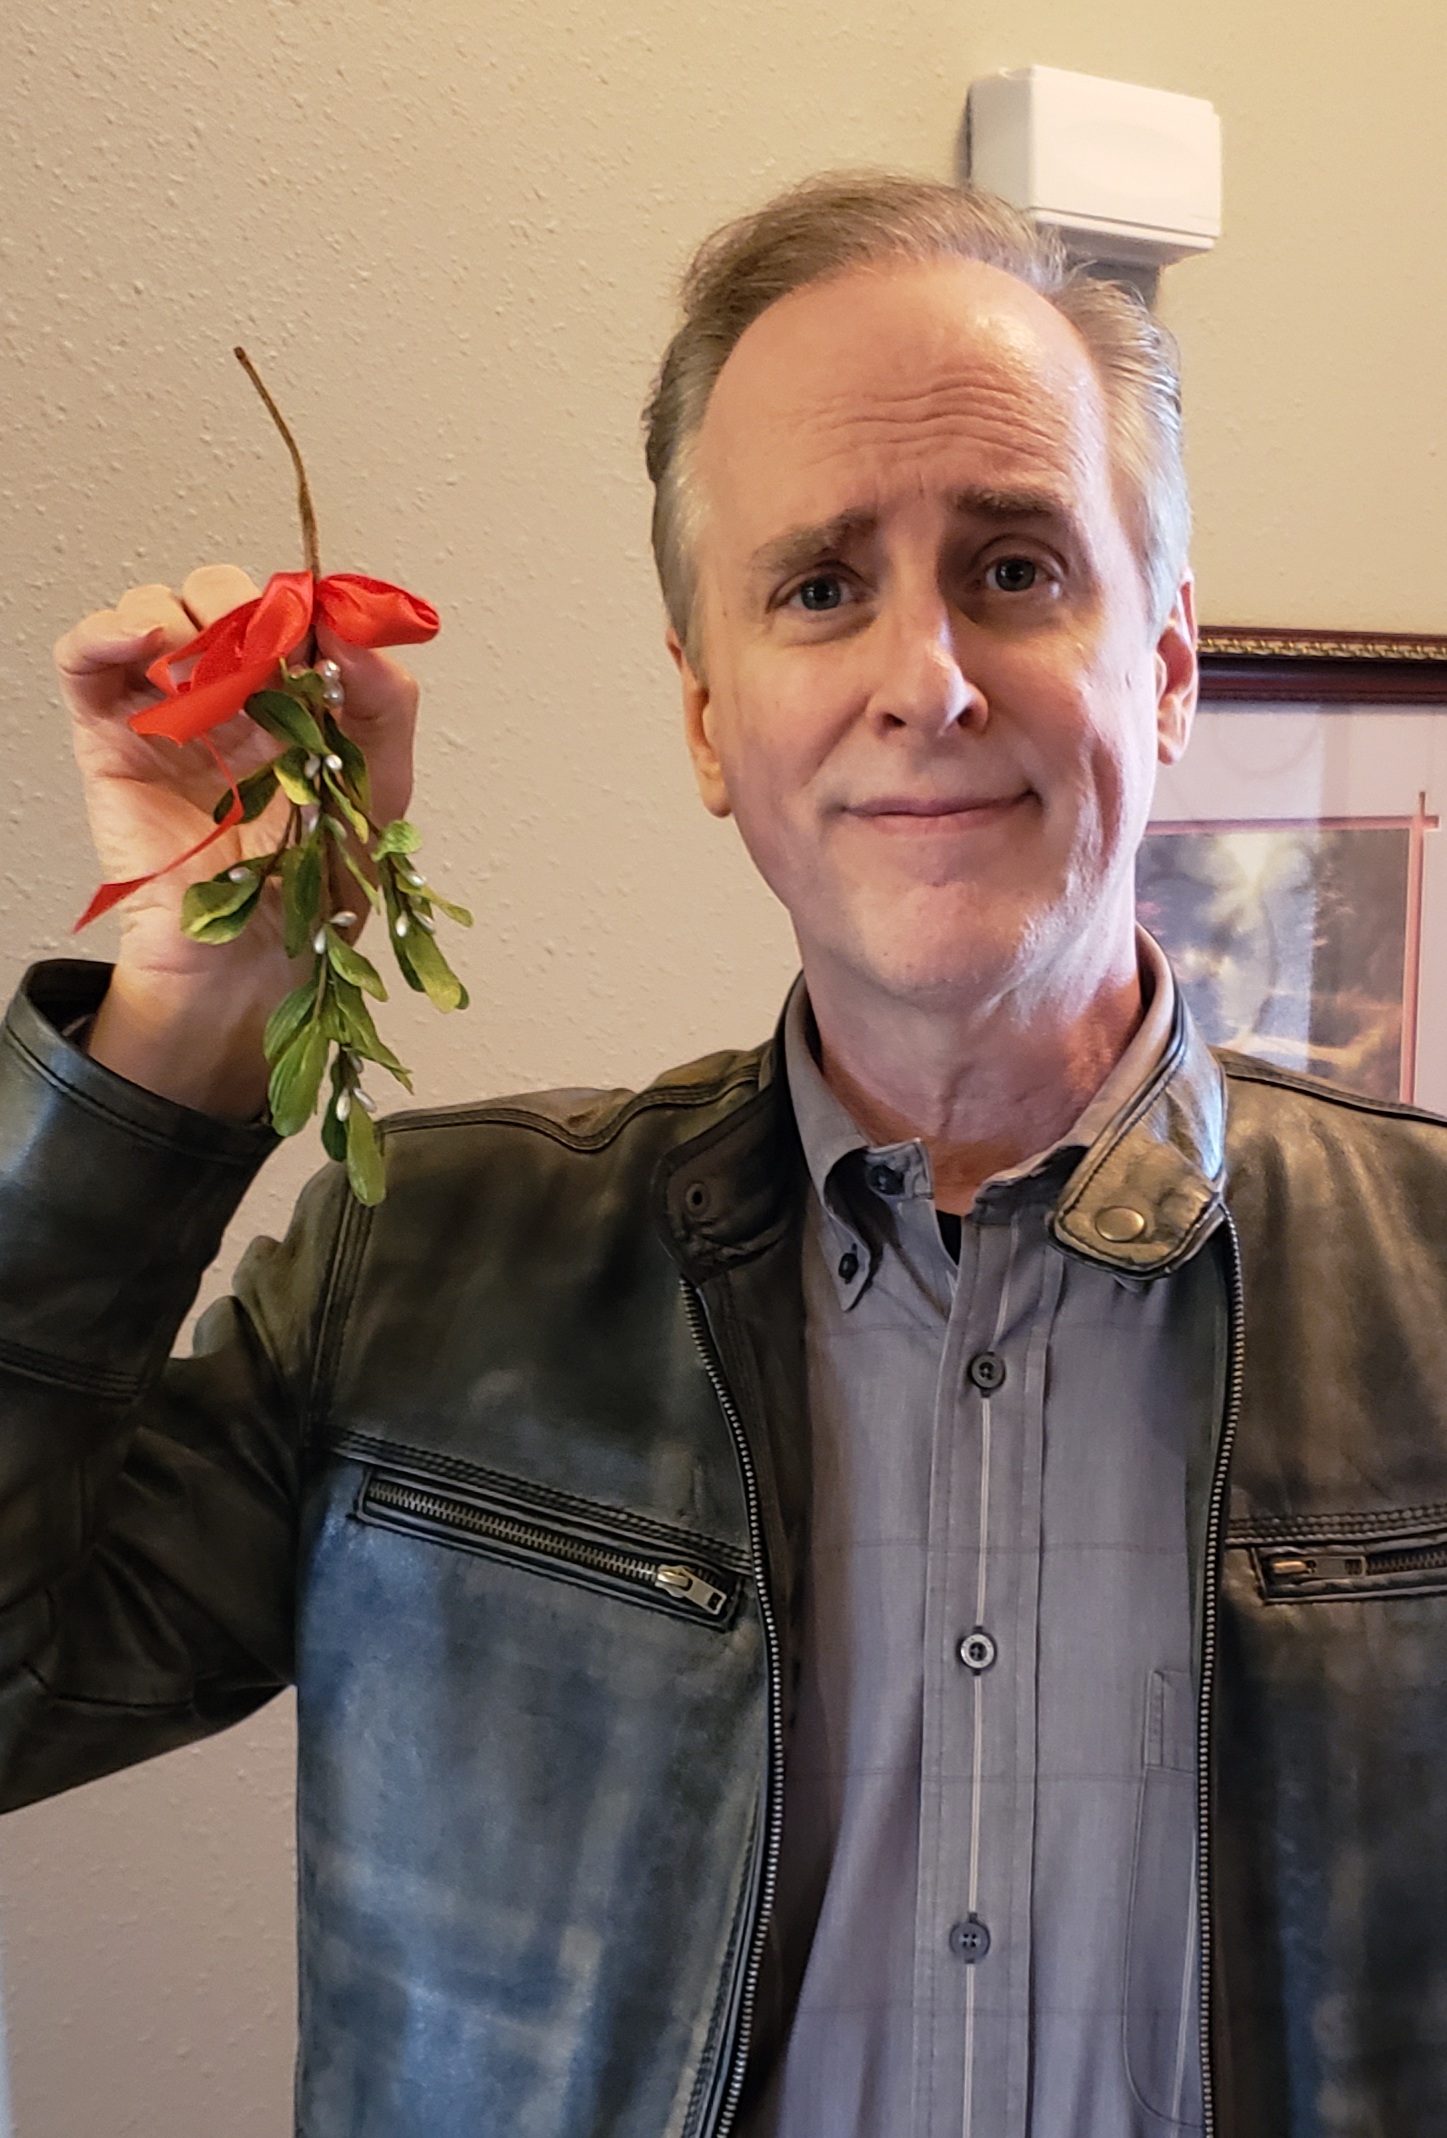 Mistletoe-tally Bizarre article by Charles Marshall